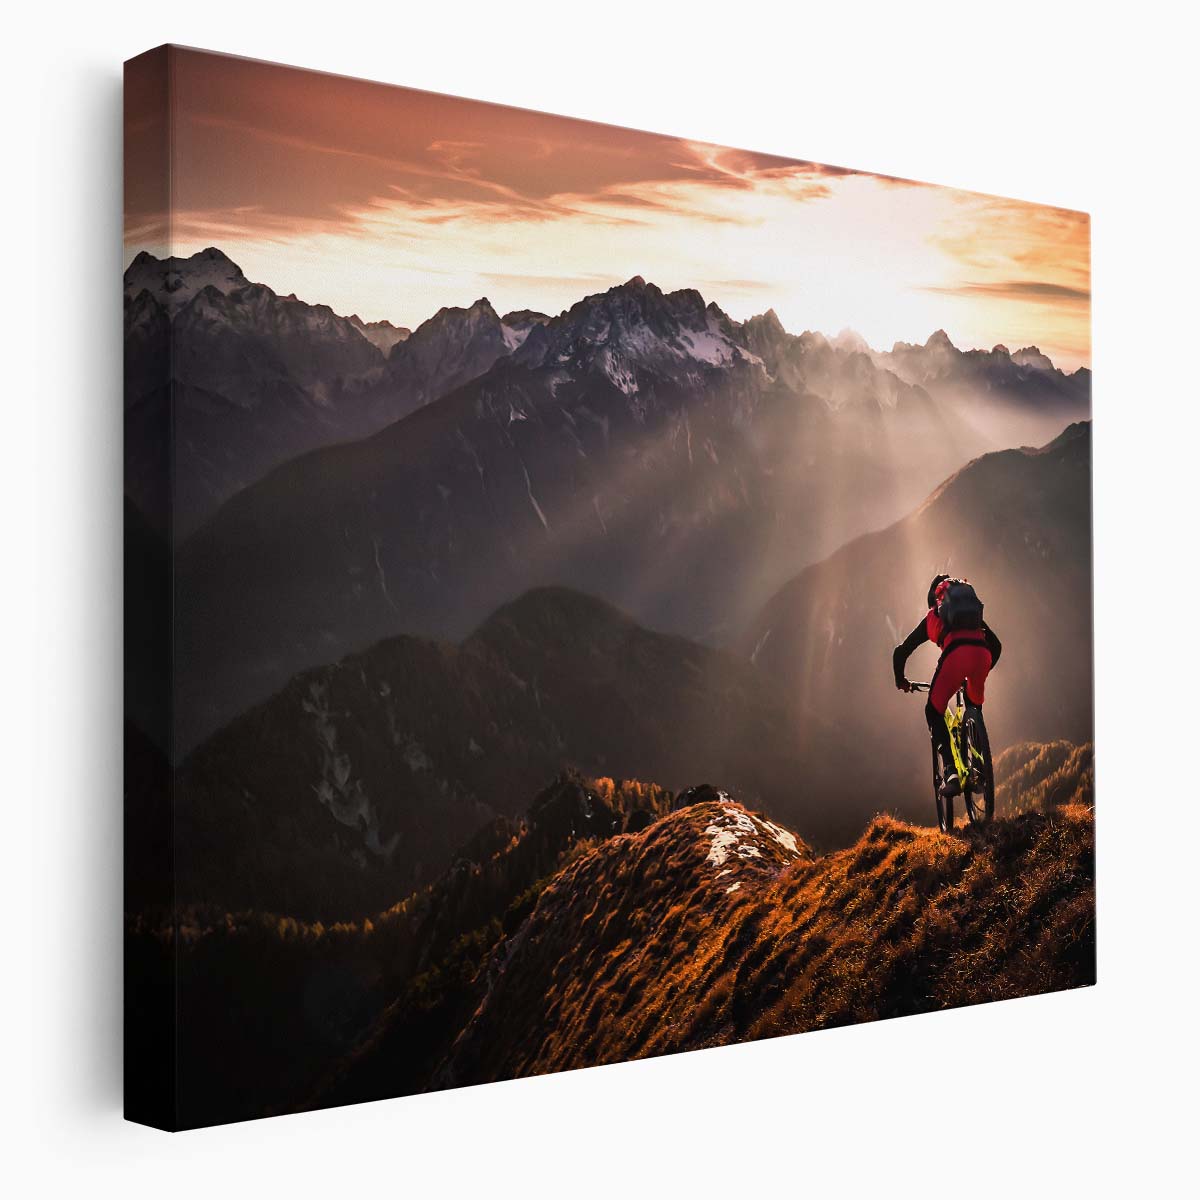 Slovenia Mountain Biking Sunset Adventure Photography Wall Art